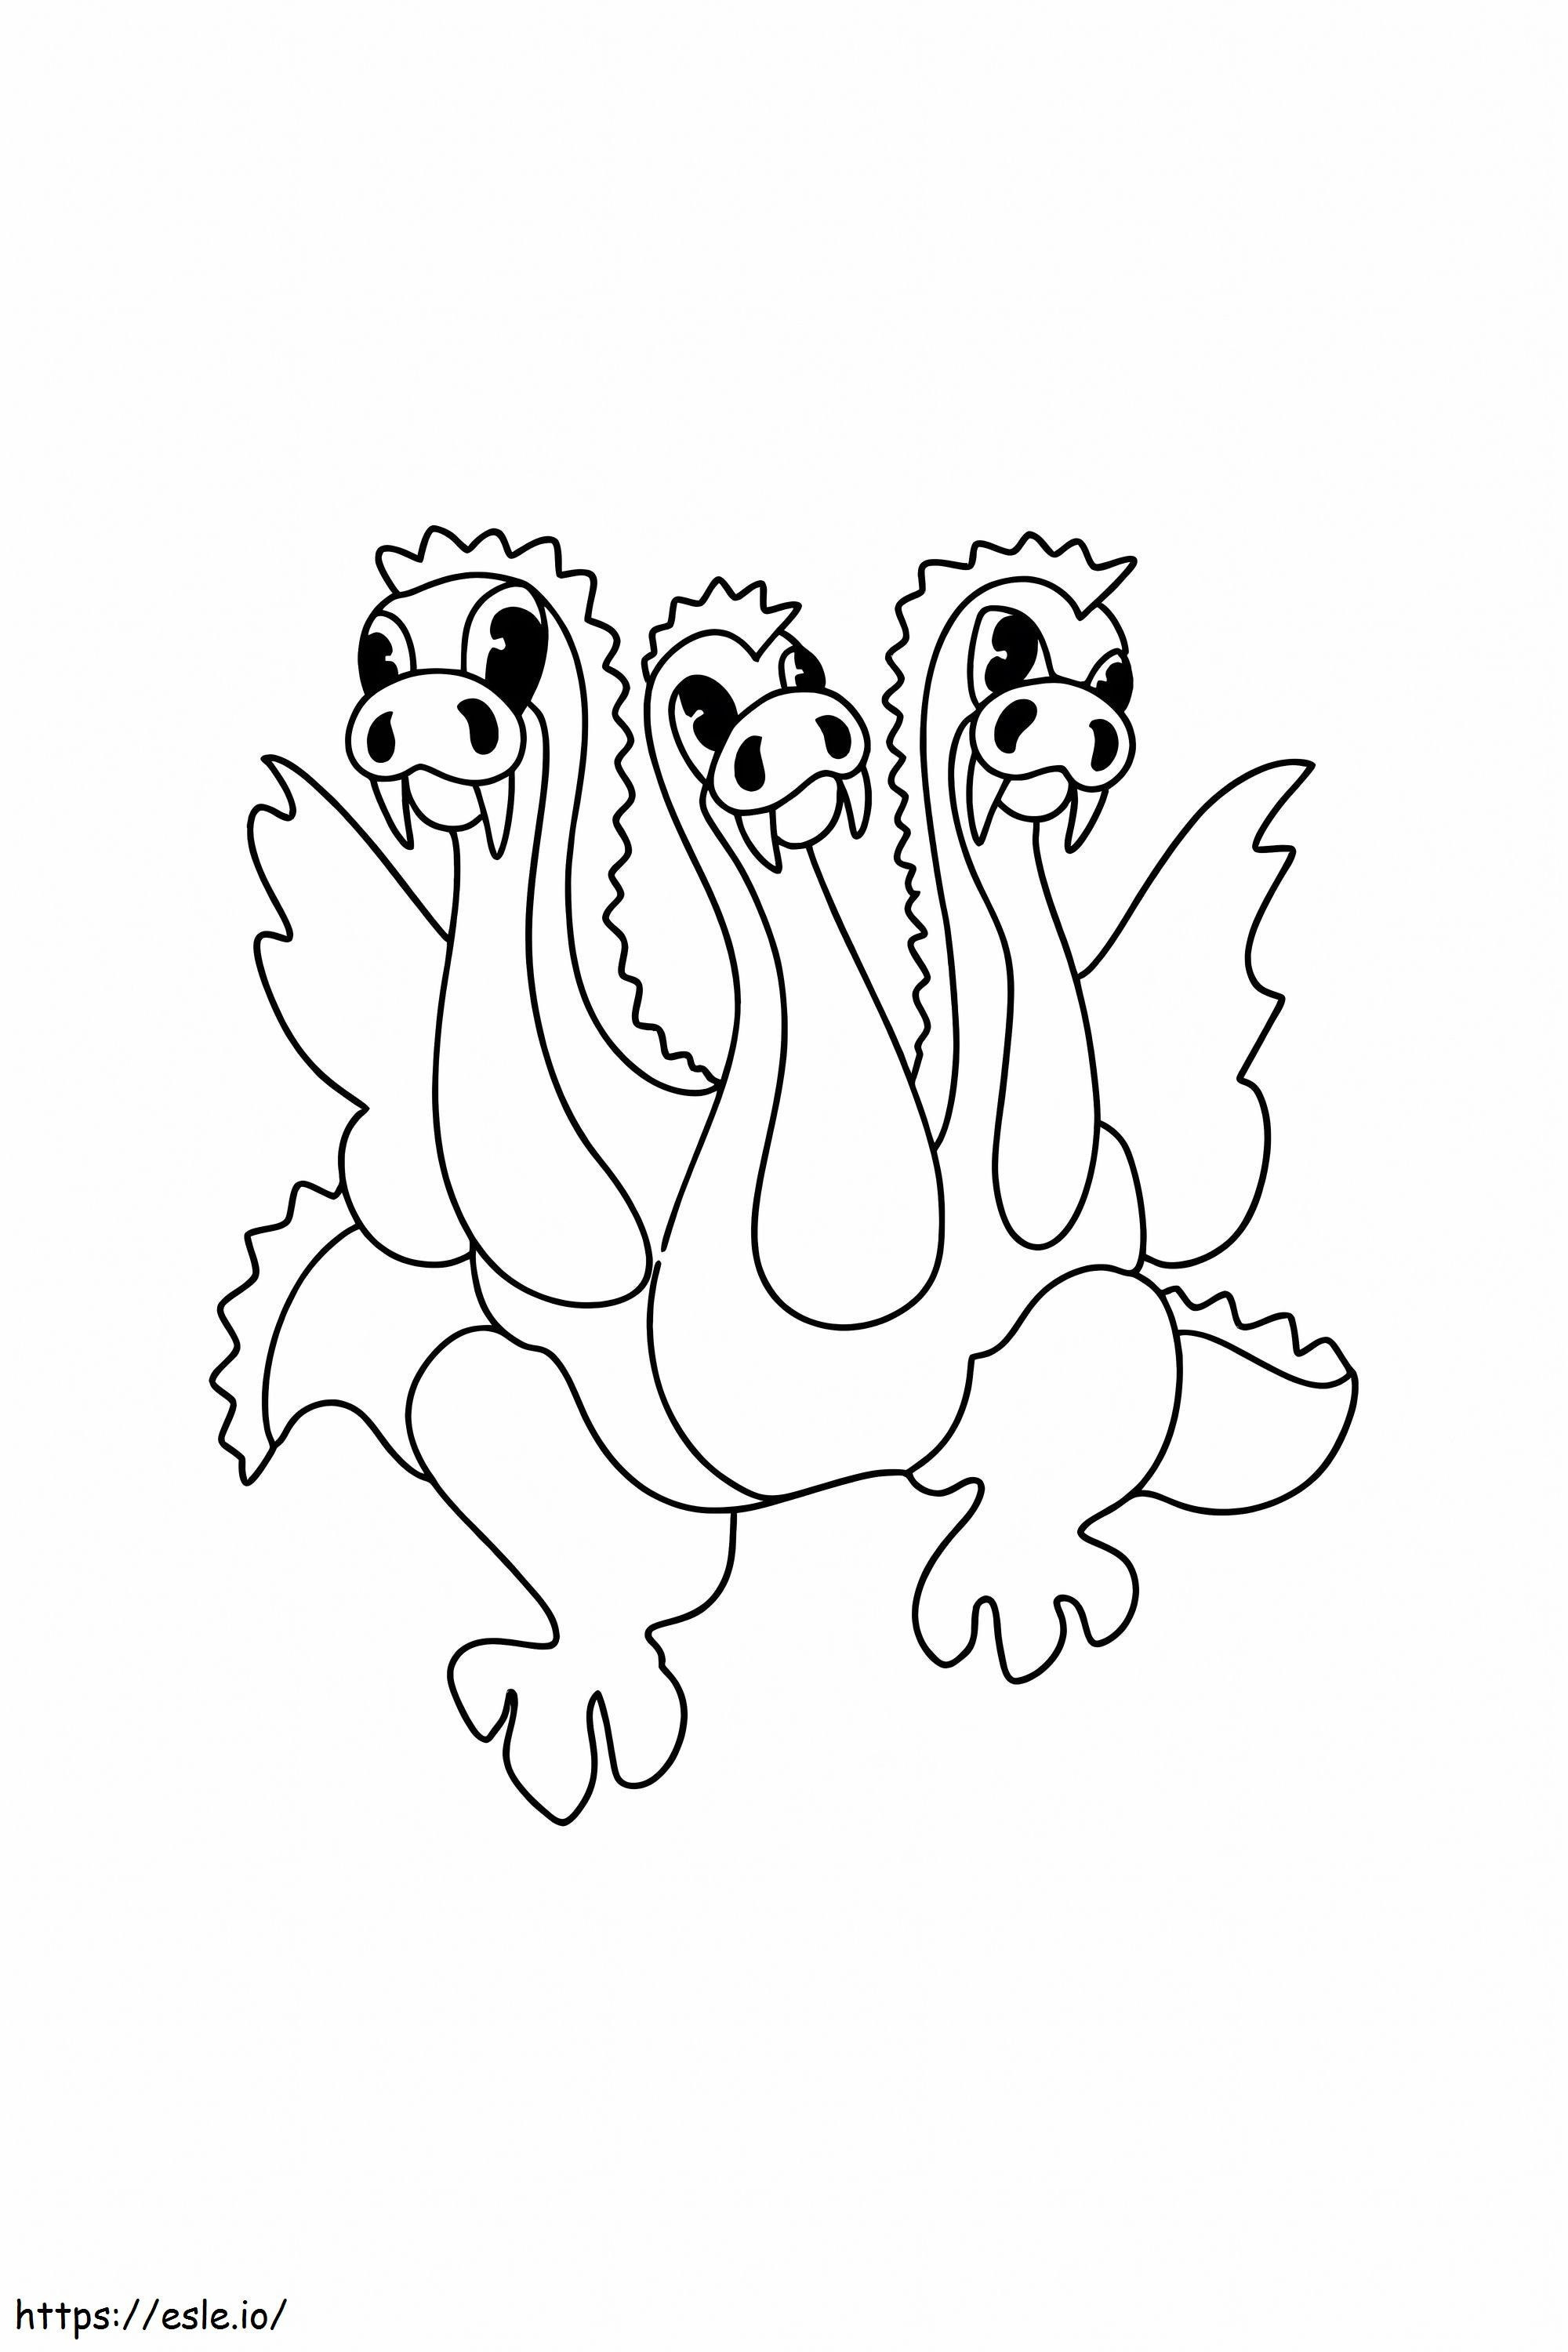 Fun Hydra coloring page